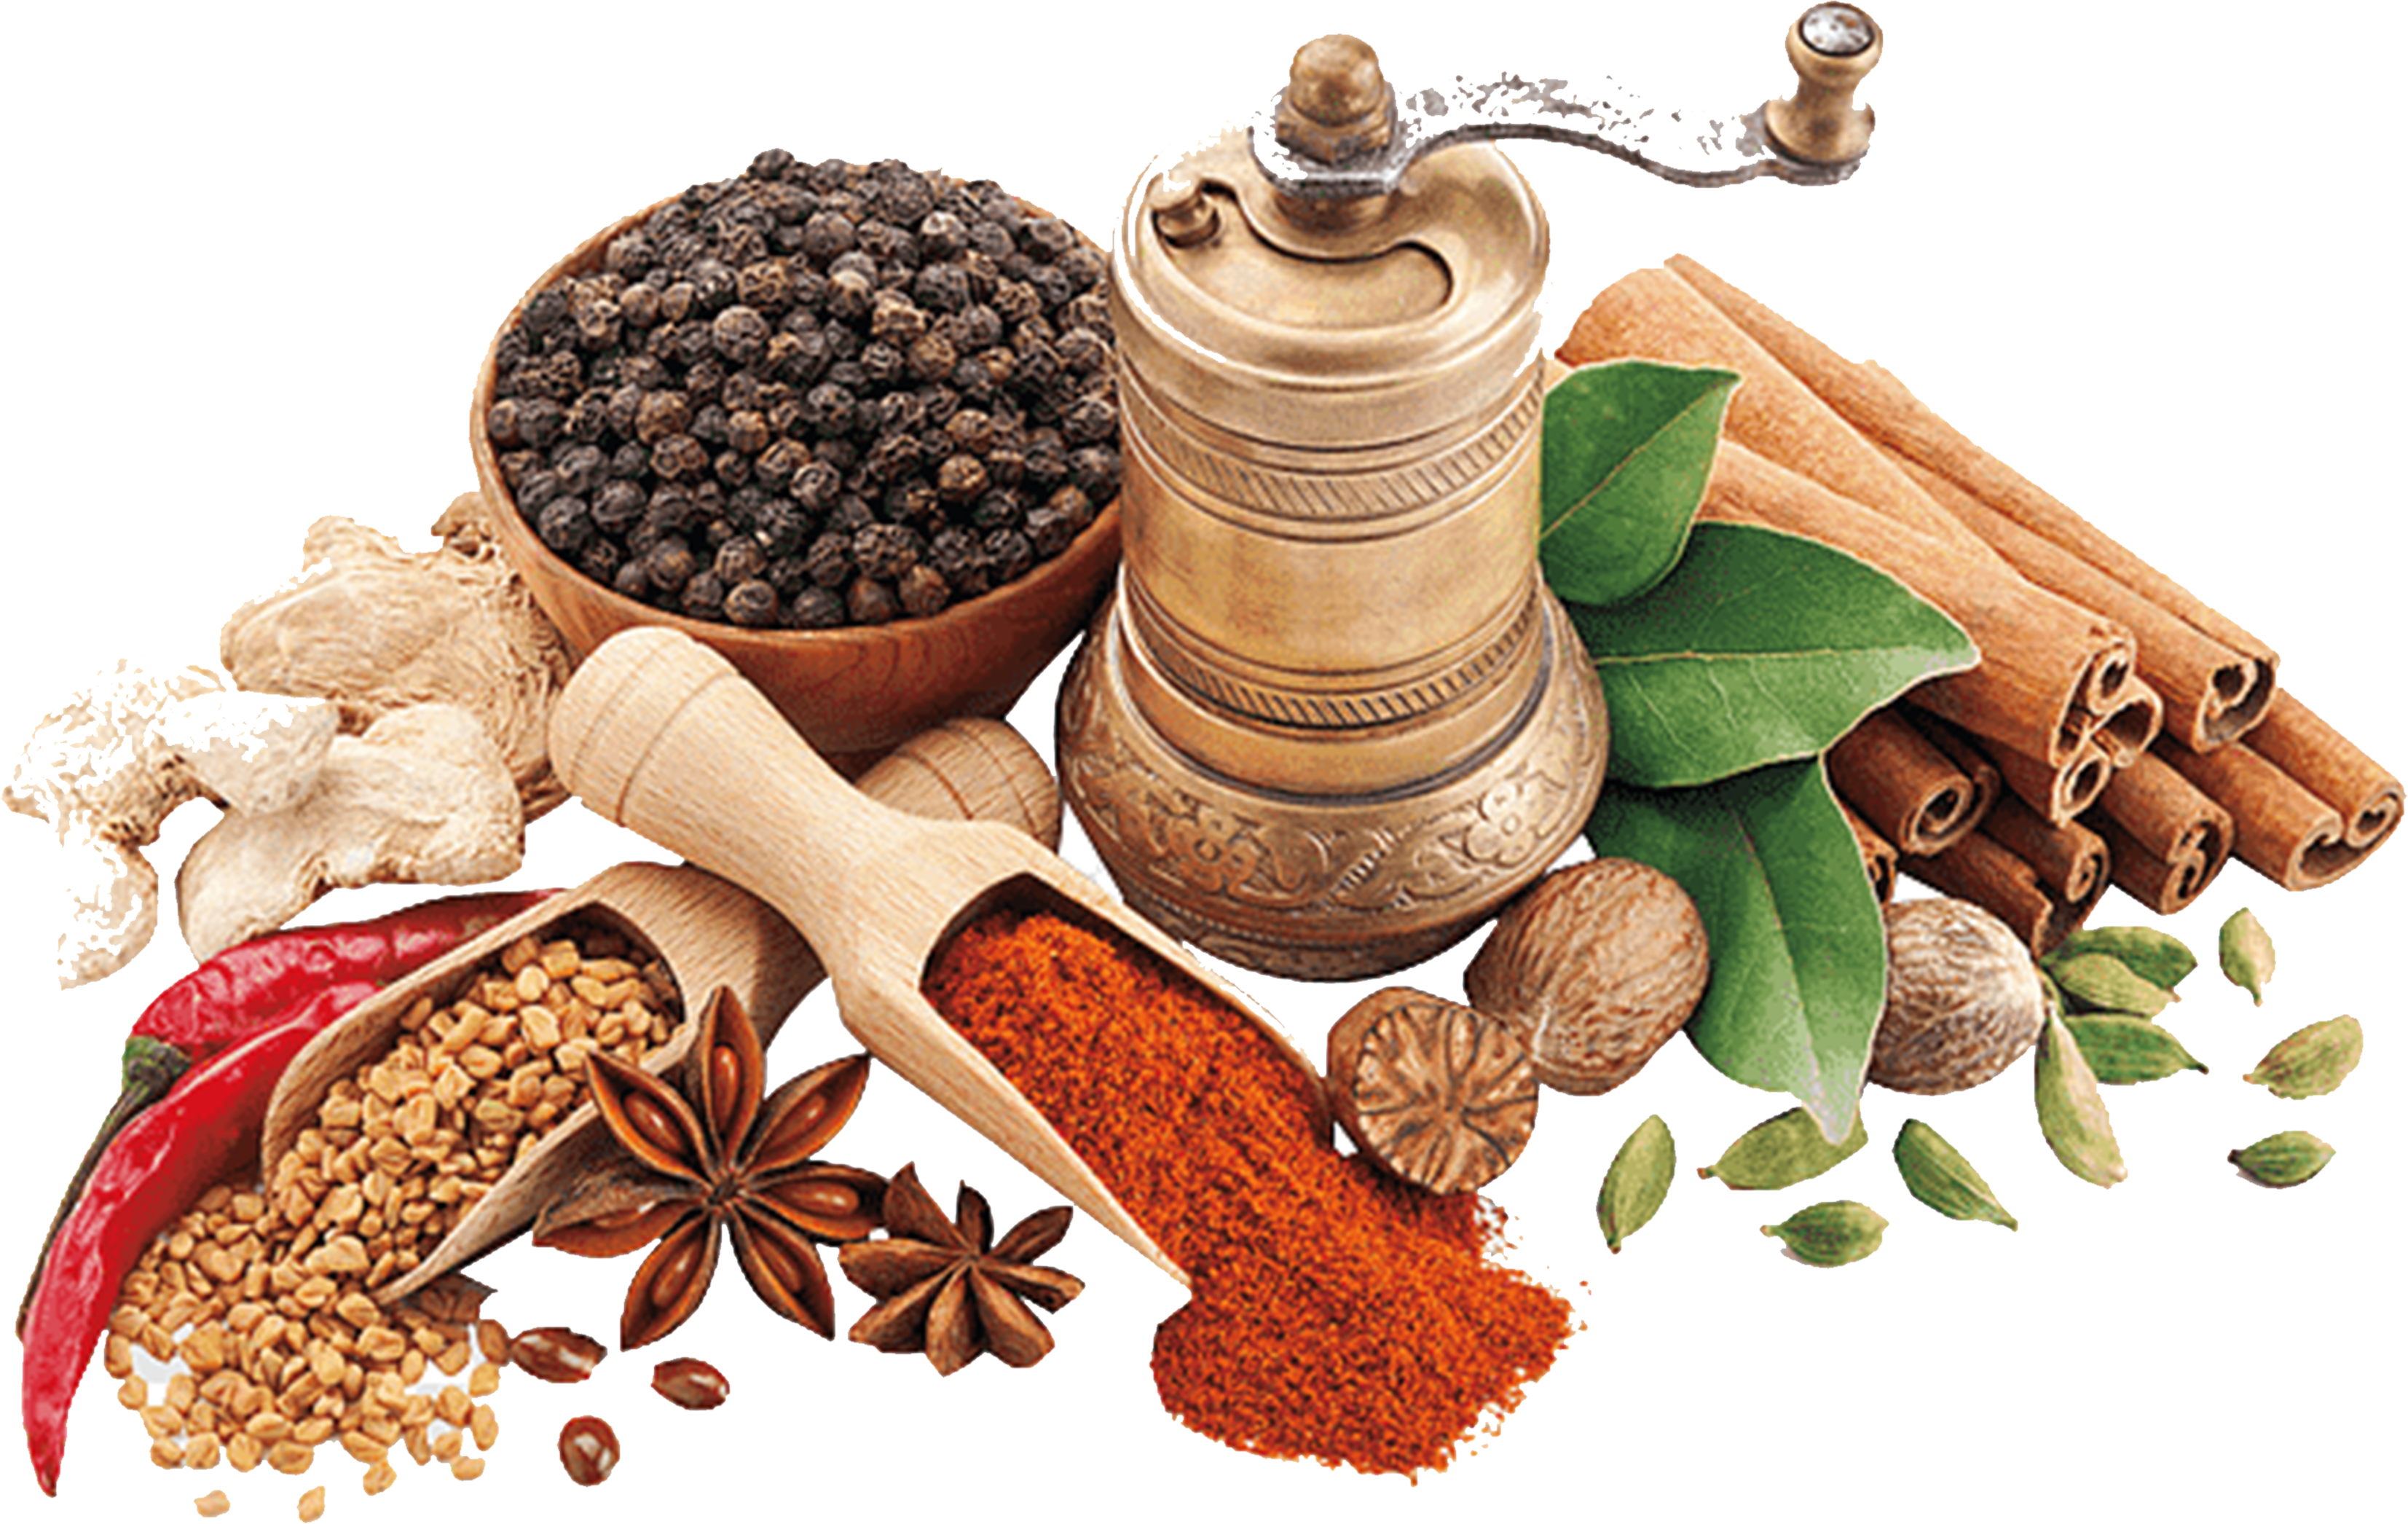 Spices & Condiment consultants